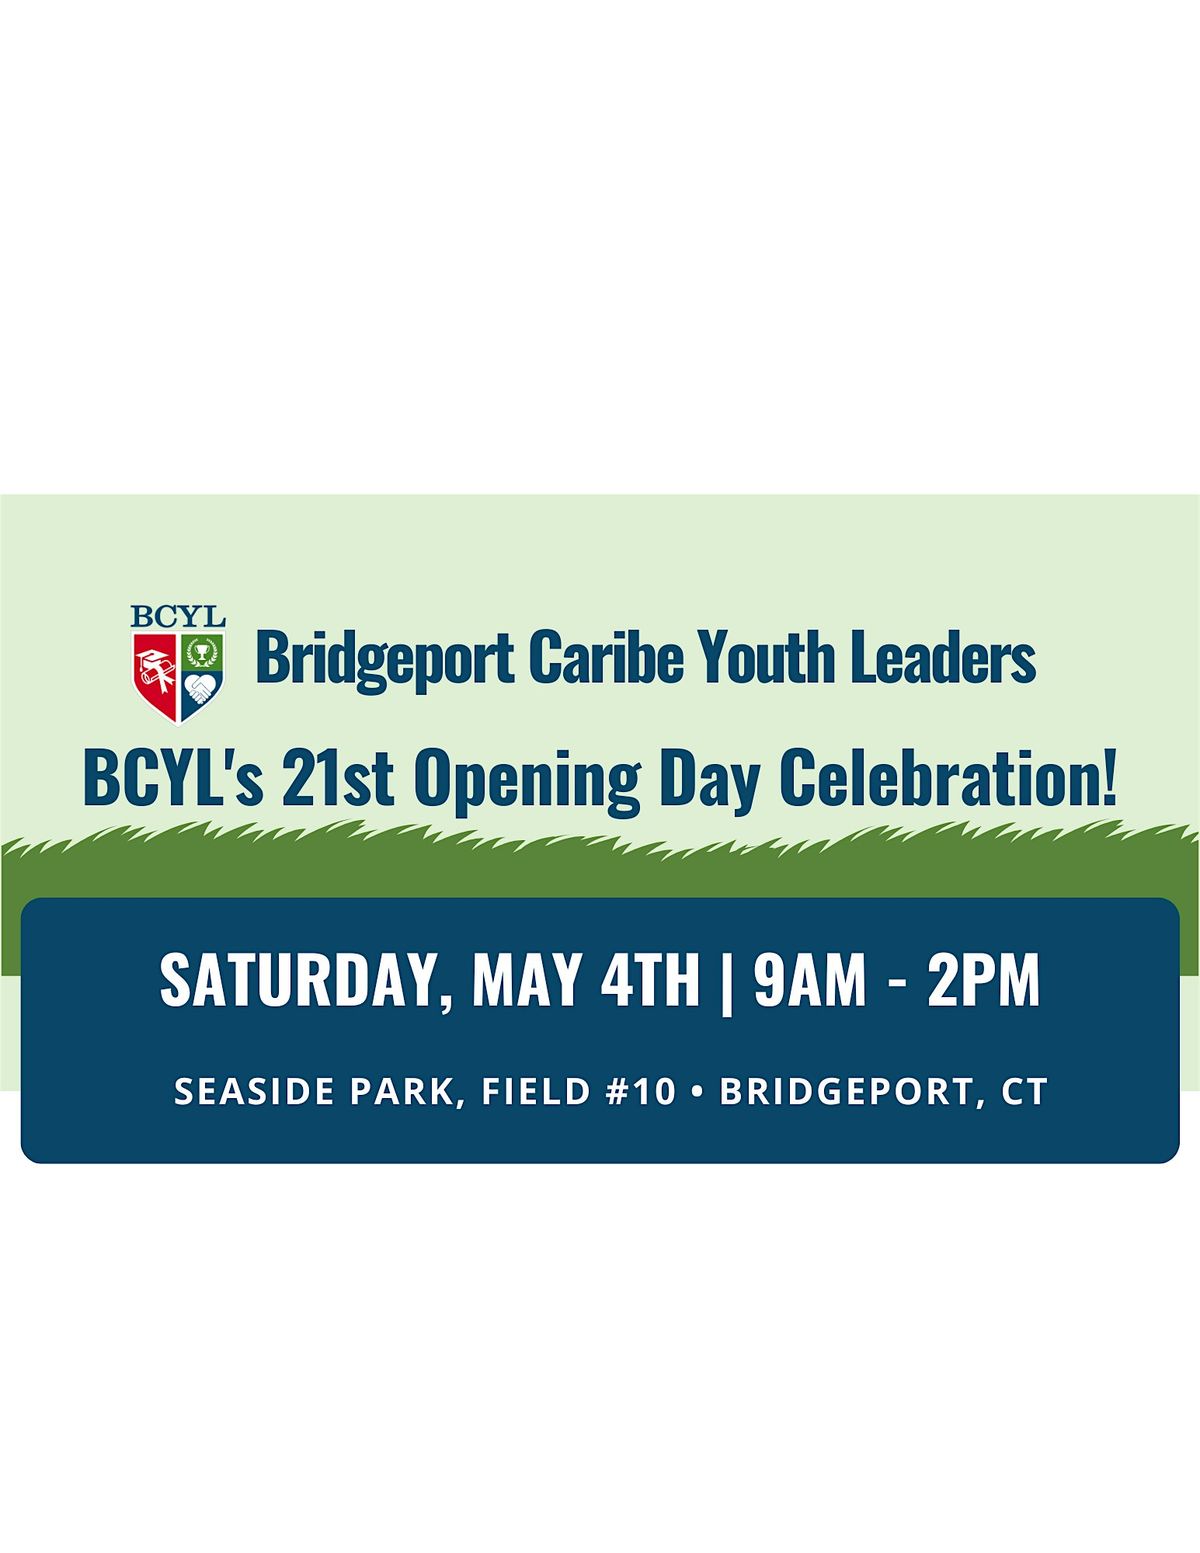 BCYL's 21st Opening Day Celebration